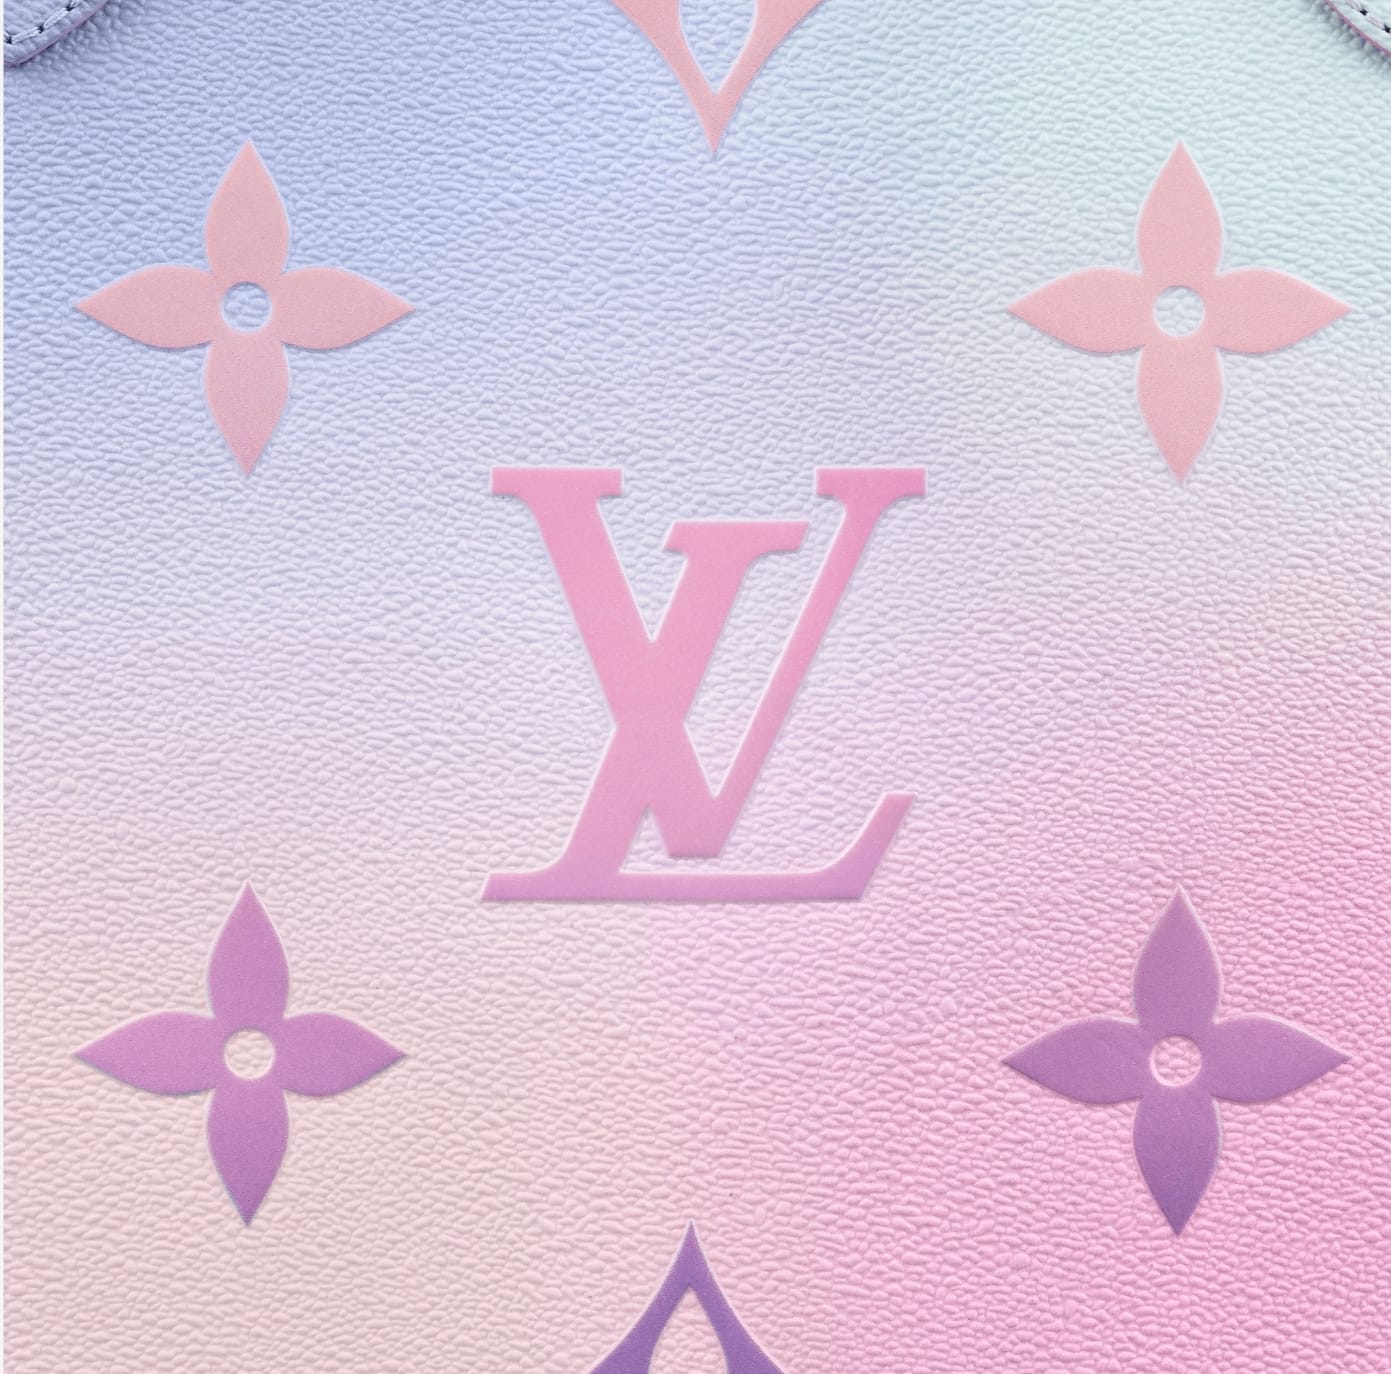 Louis Vuitton Iphone Wallpaper 039  Louis vuitton iphone wallpaper, Iphone  wallpaper, Pink wallpaper iphone